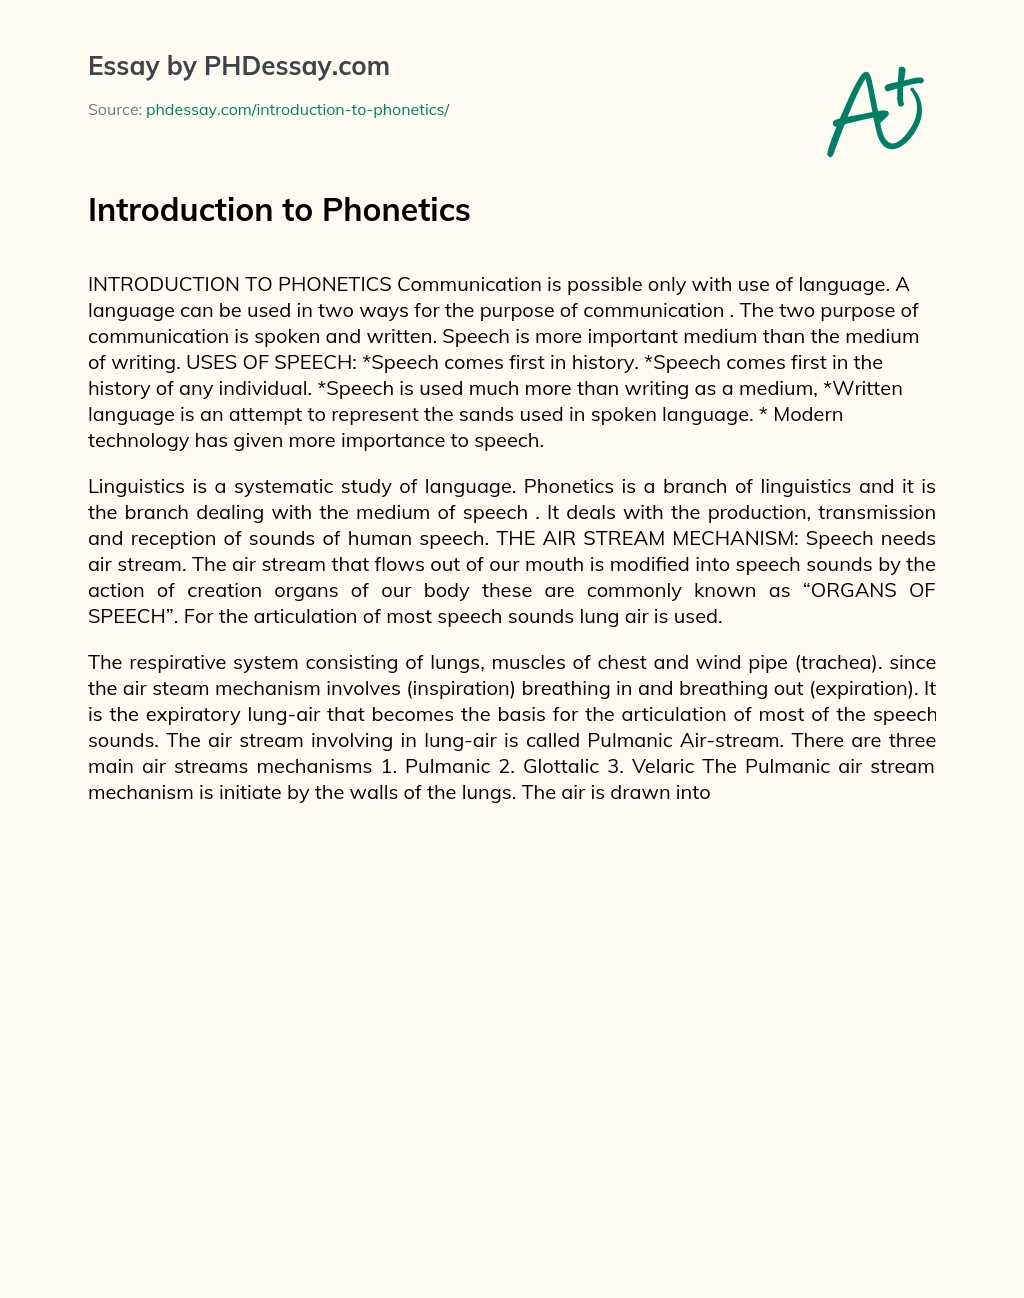 Introduction to Phonetics essay